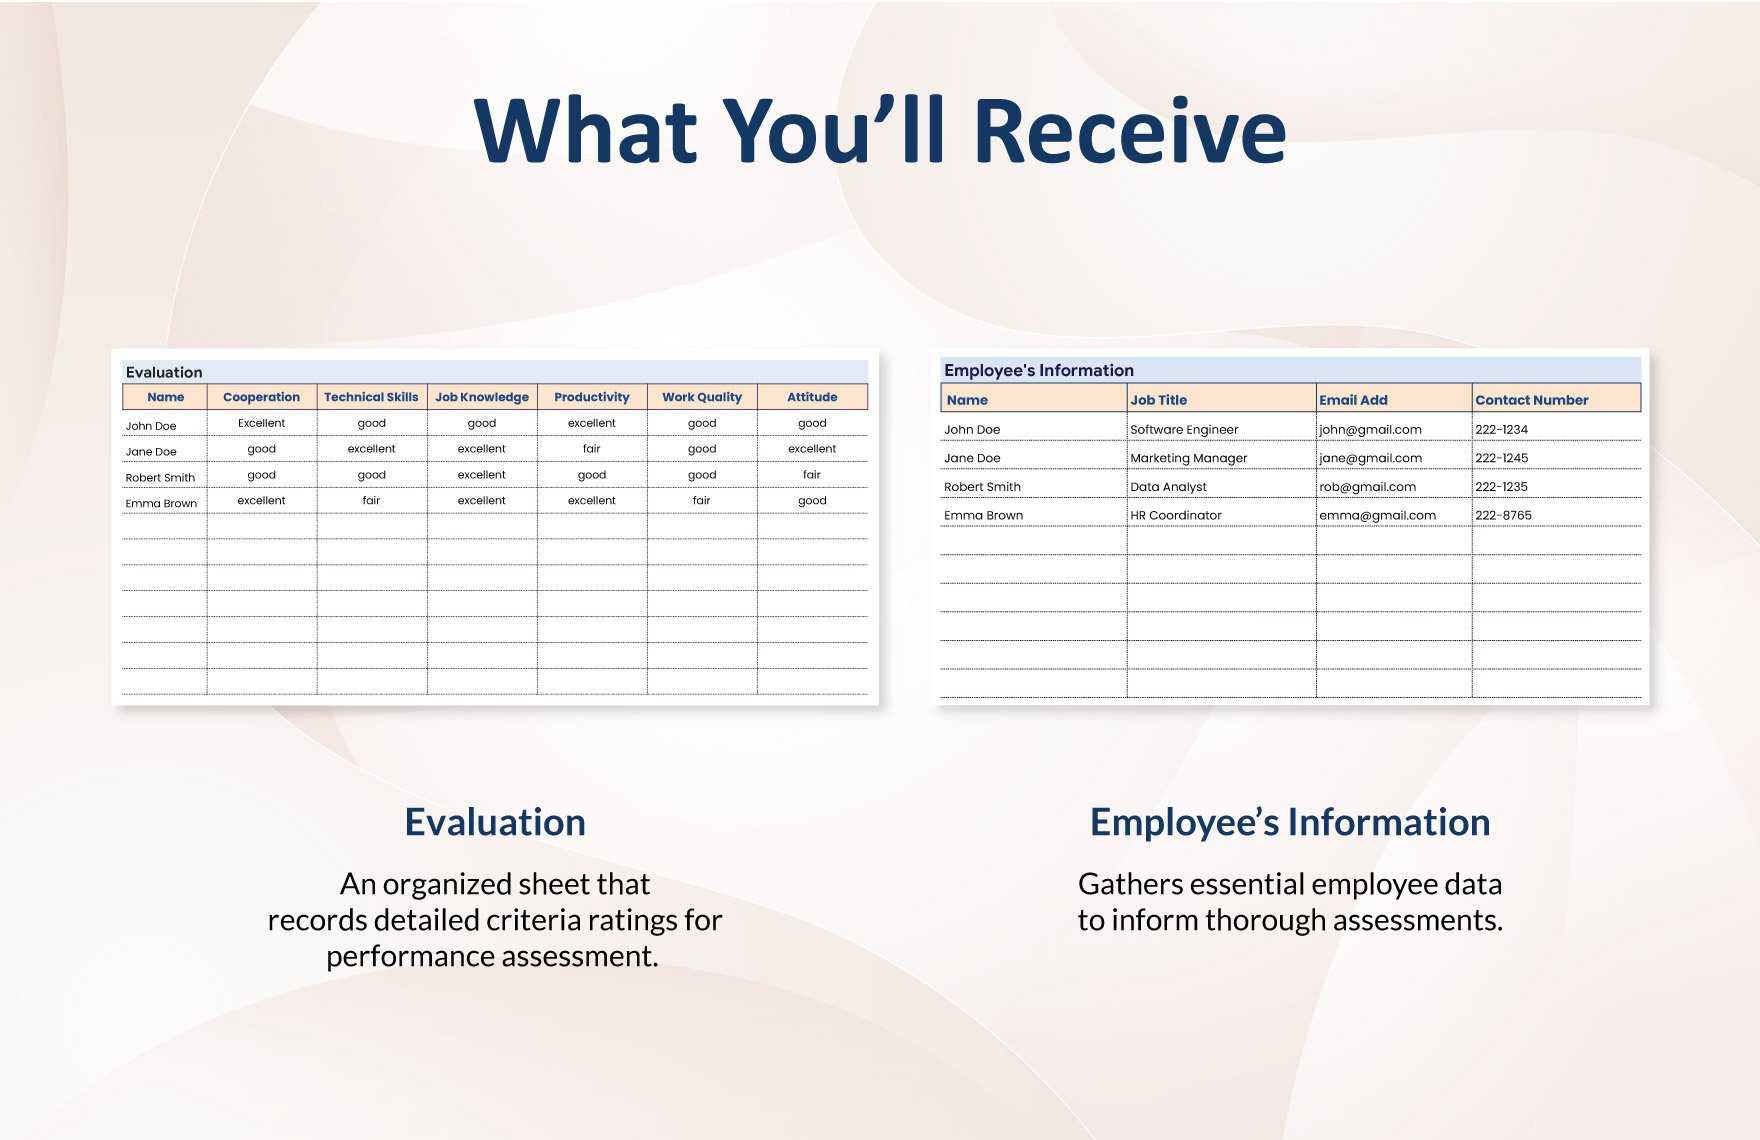 Assessment Evaluation Scorecard HR Template